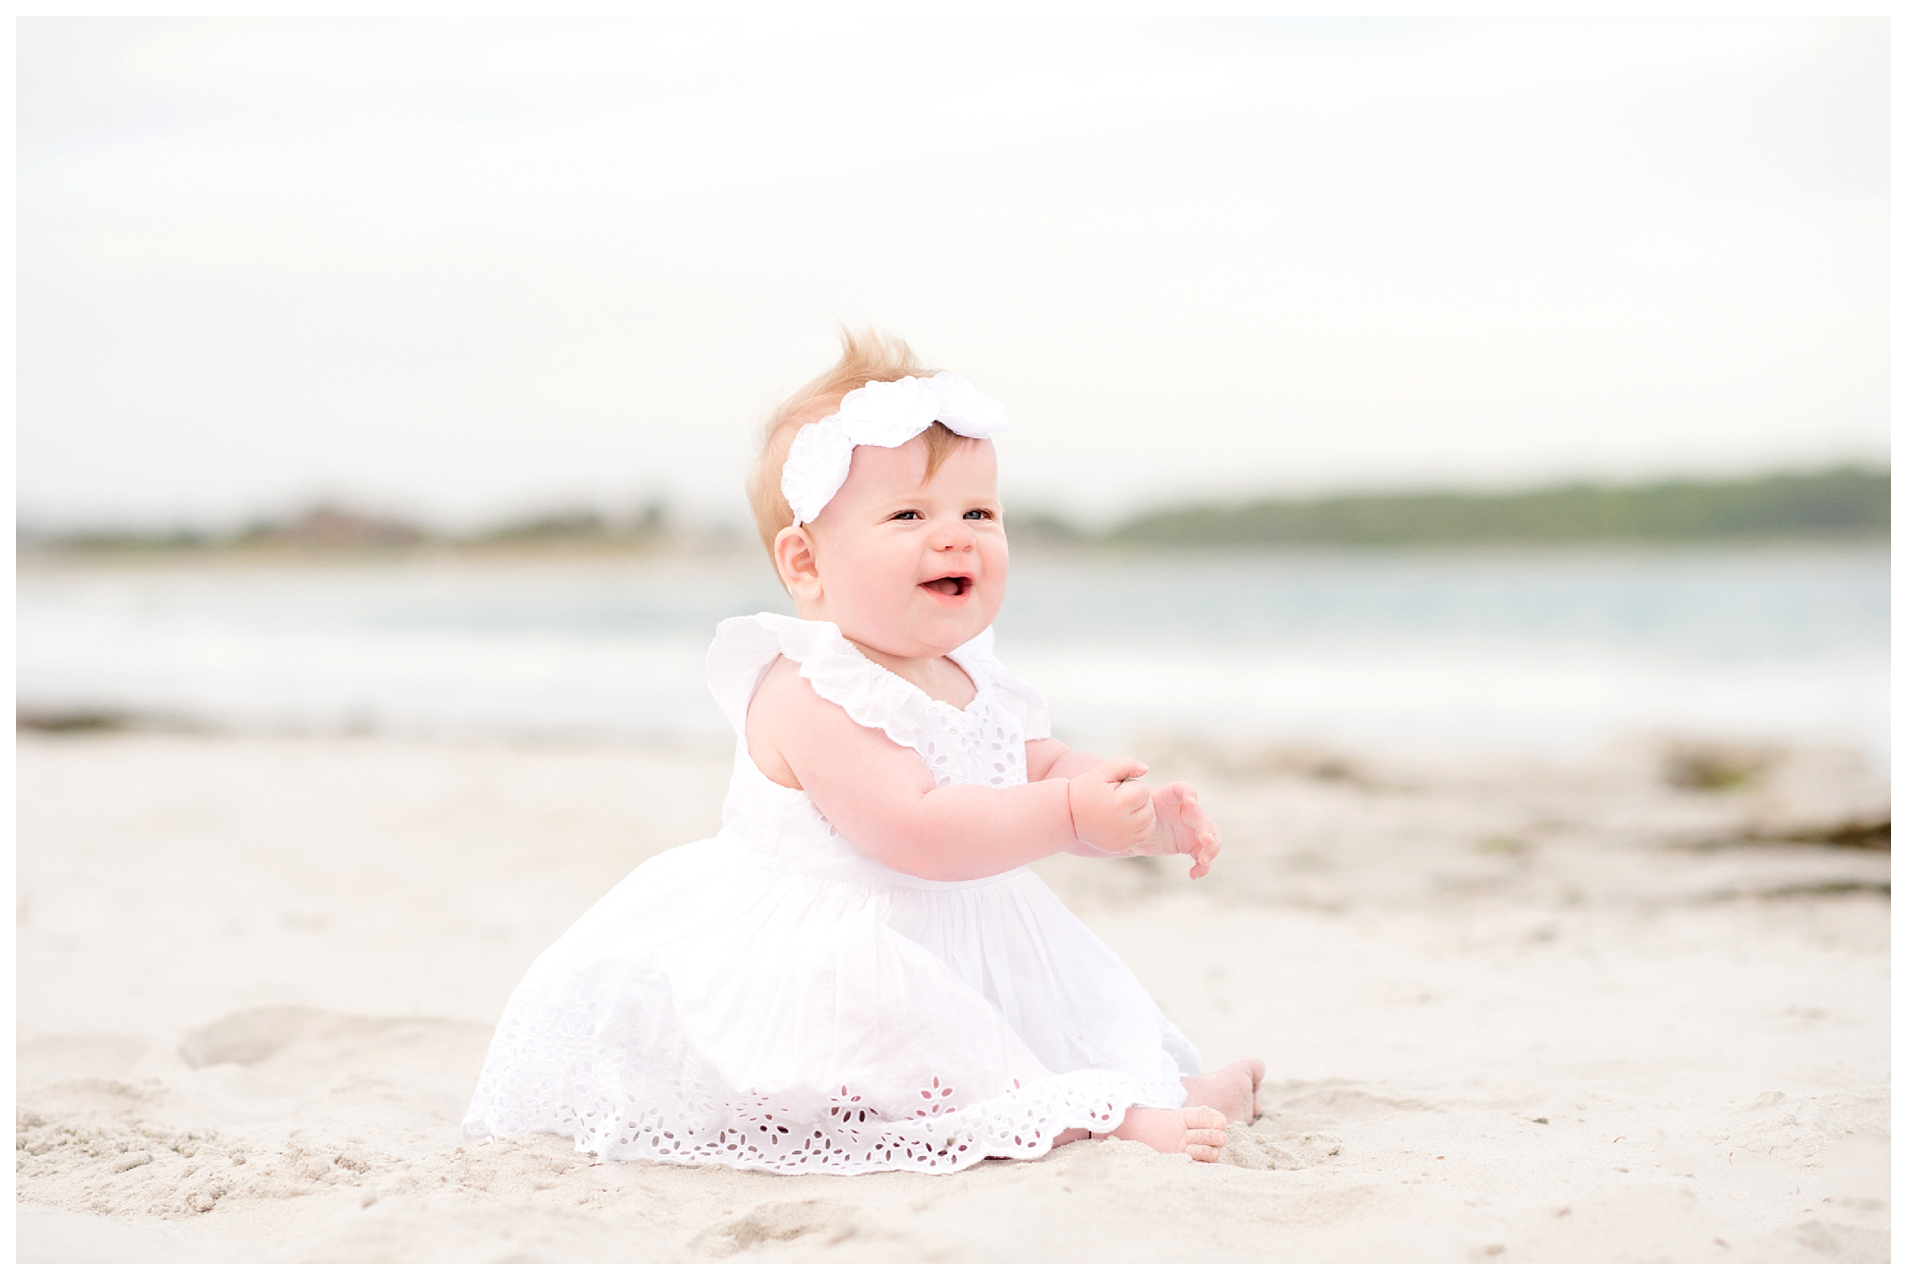 Baby-Photographer-Sweet-Light-Portraits02.jpg